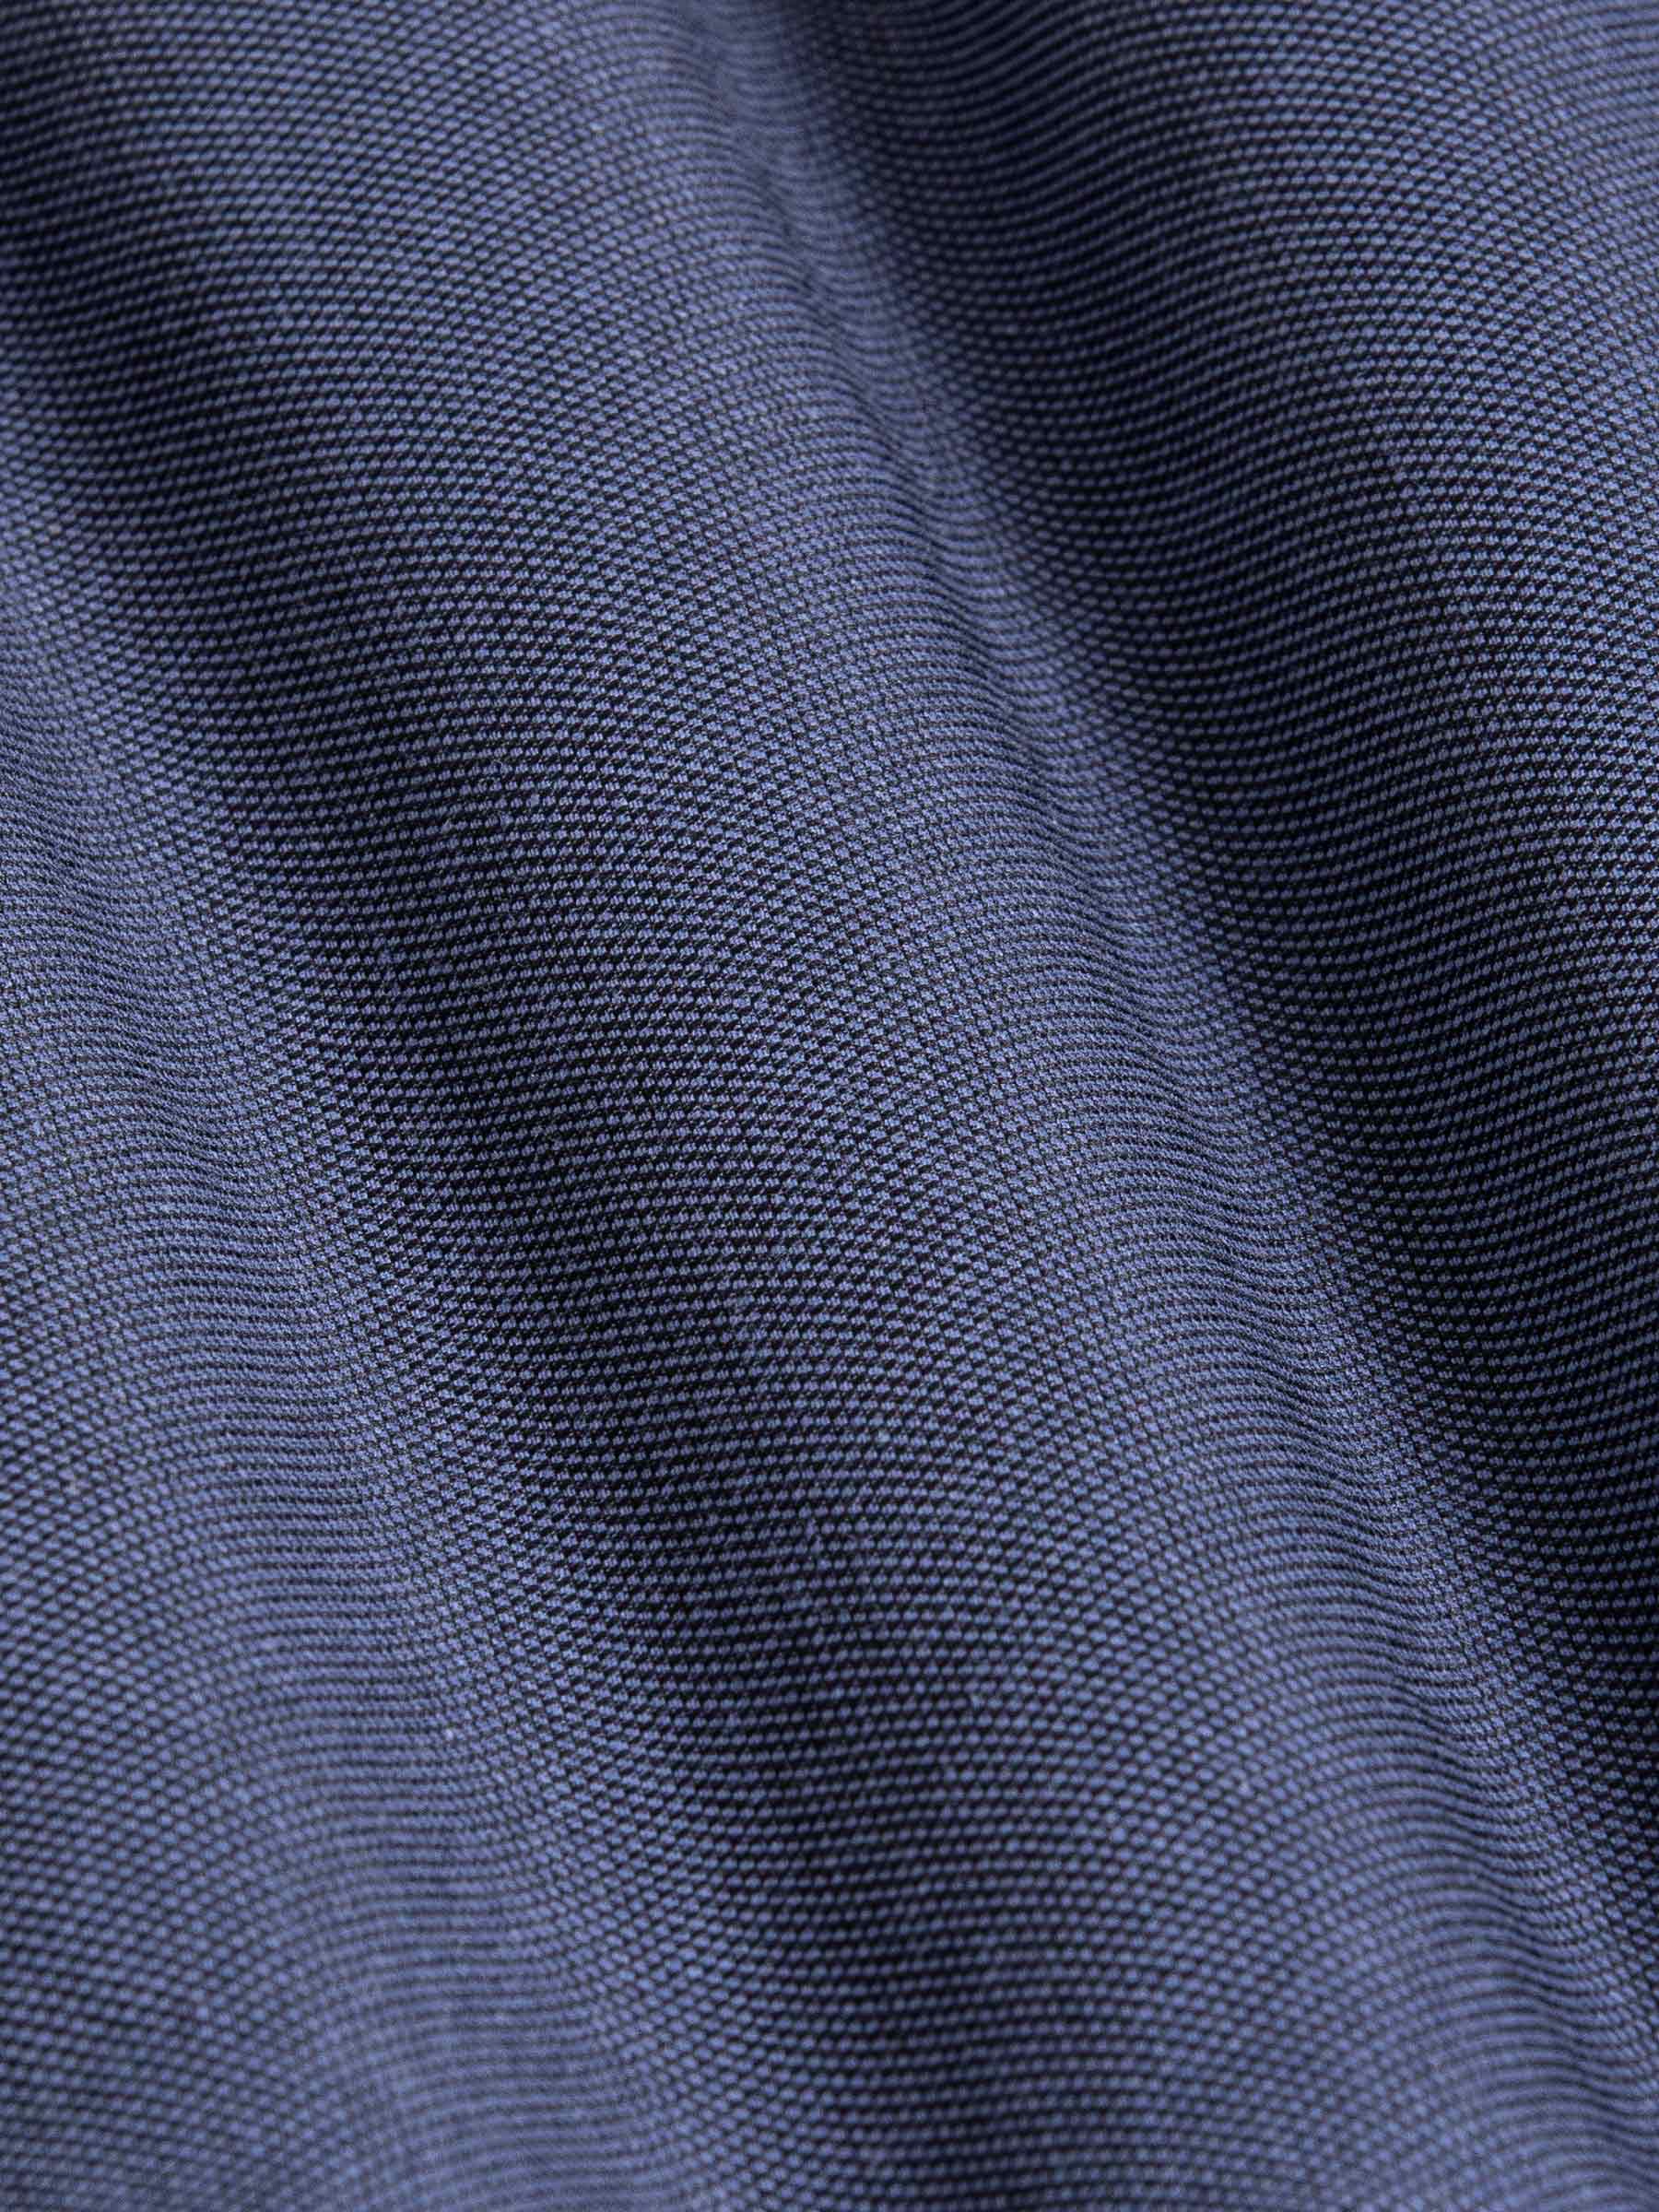 Flers Double Collar Dark Indigo Overhemd Lange Mouw-3XL